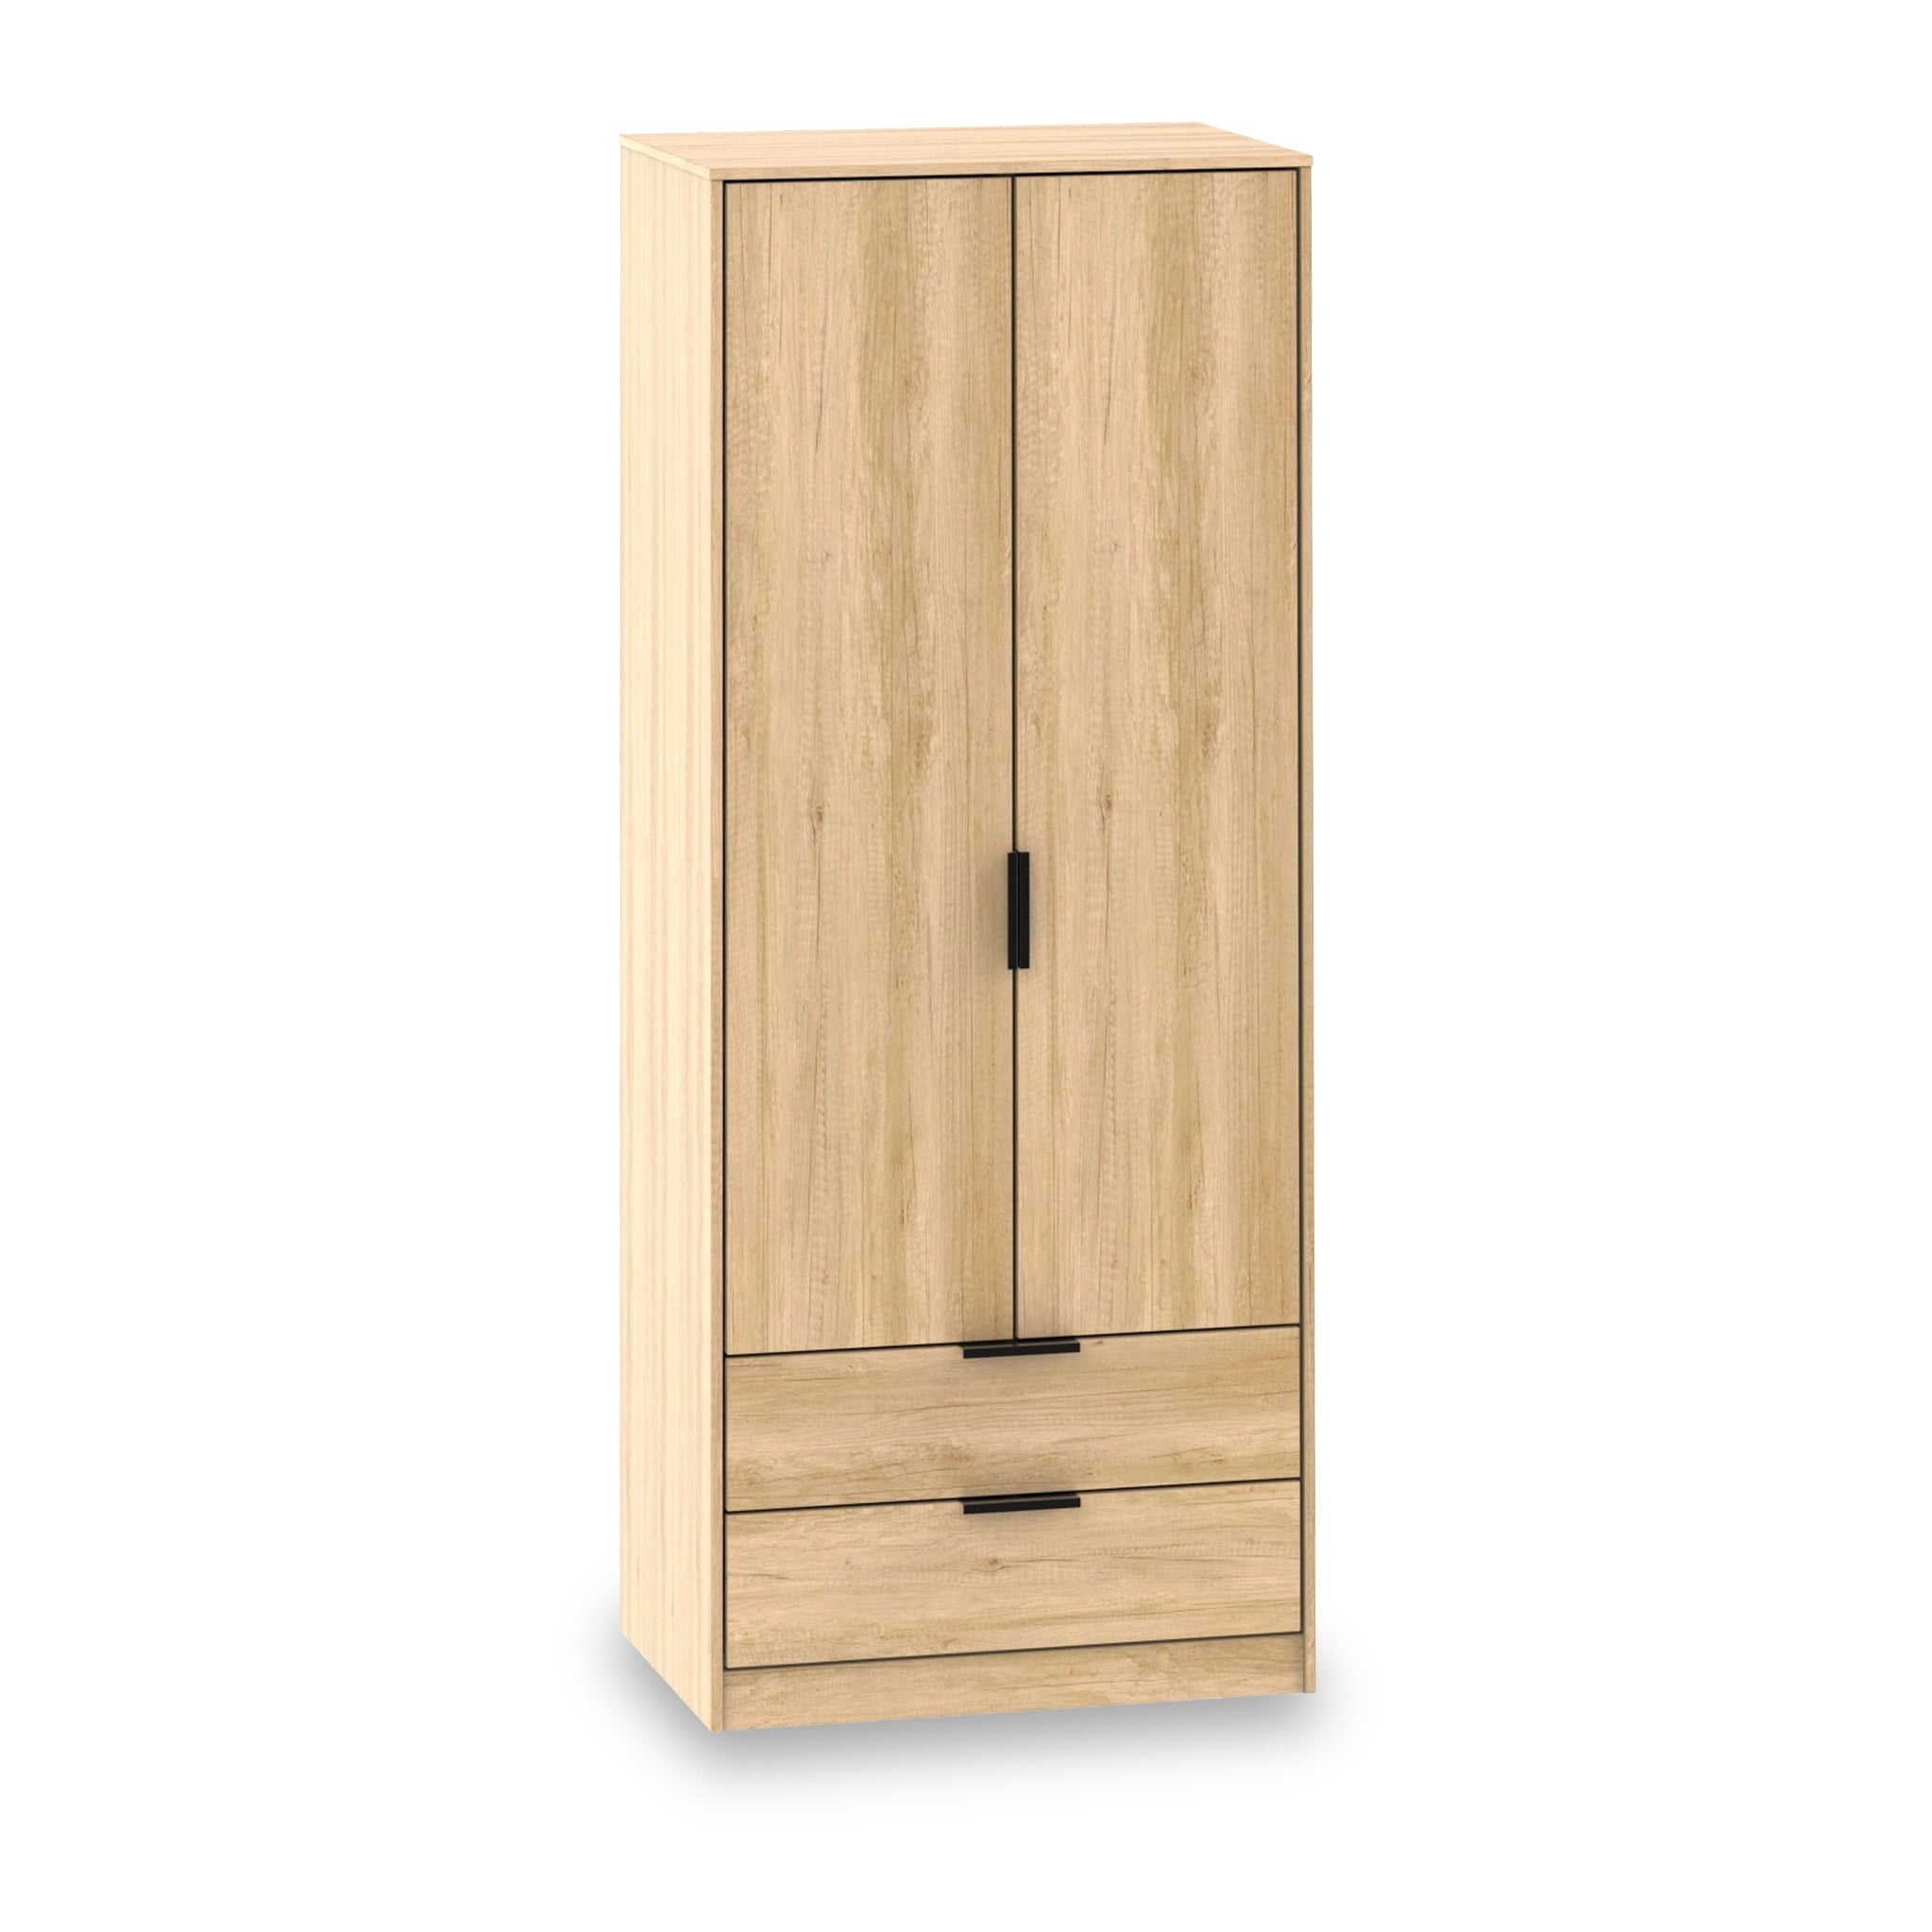 Asher Light Oak Wooden 2 Door Double Wardrobe With Drawers Roseland